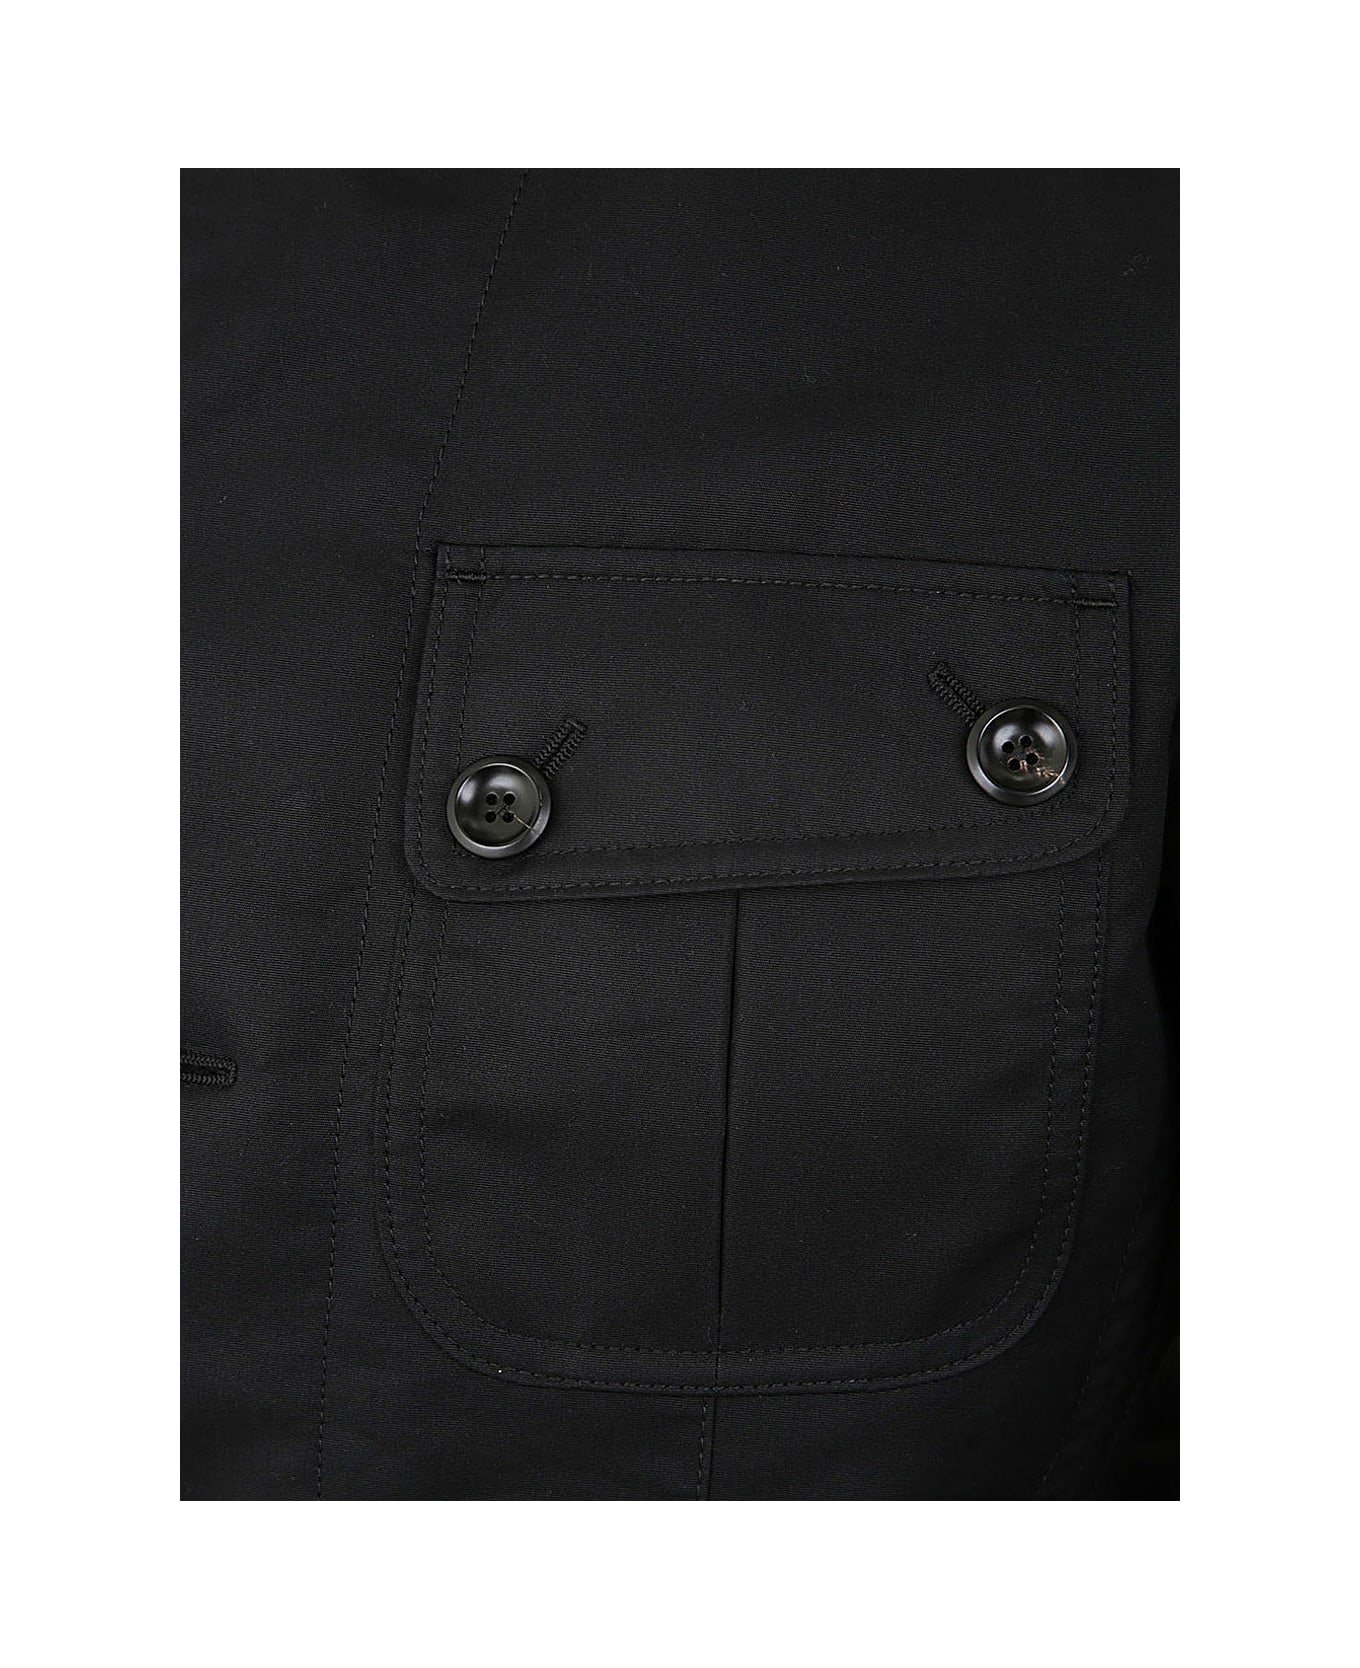 Tom Ford Outwear Jacket - Black